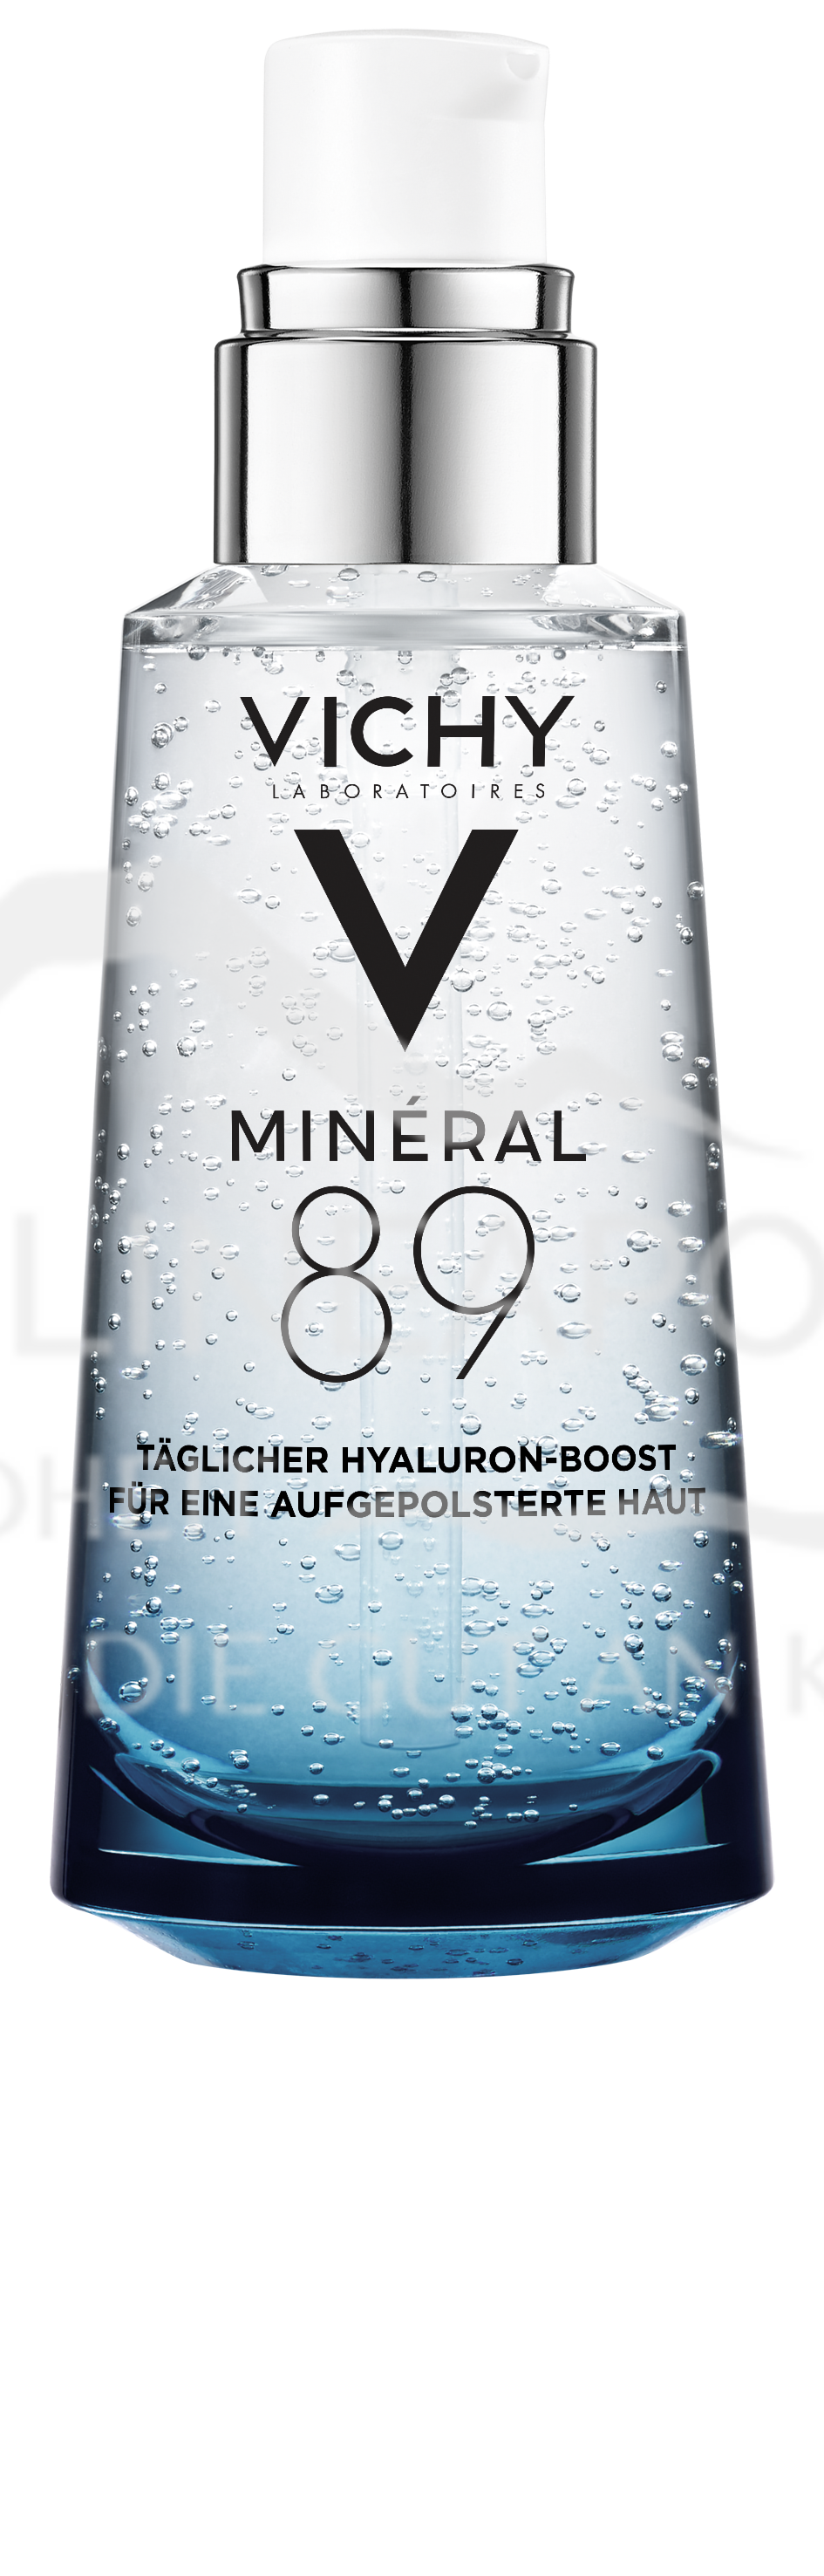 VICHY Minéral 89 Hyaluron-Boost